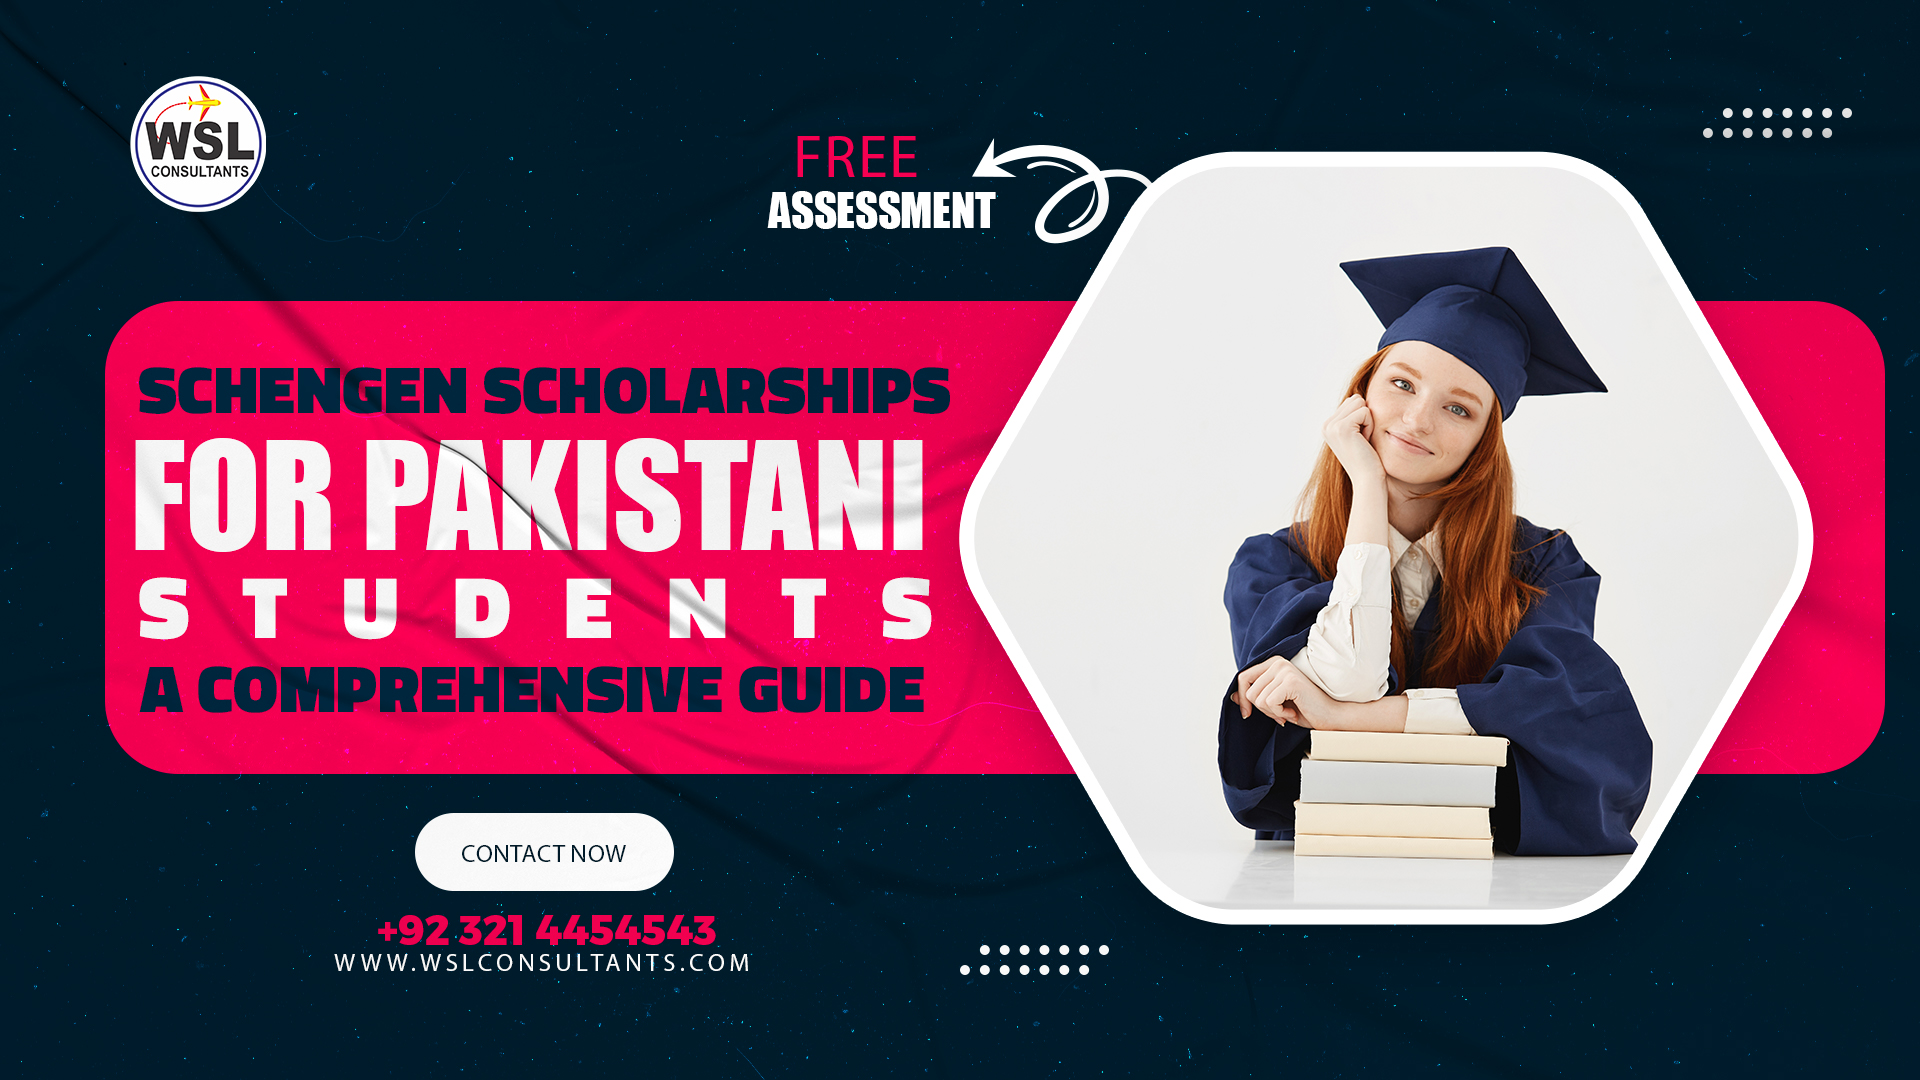 Schengen scholarships for Pakistani students